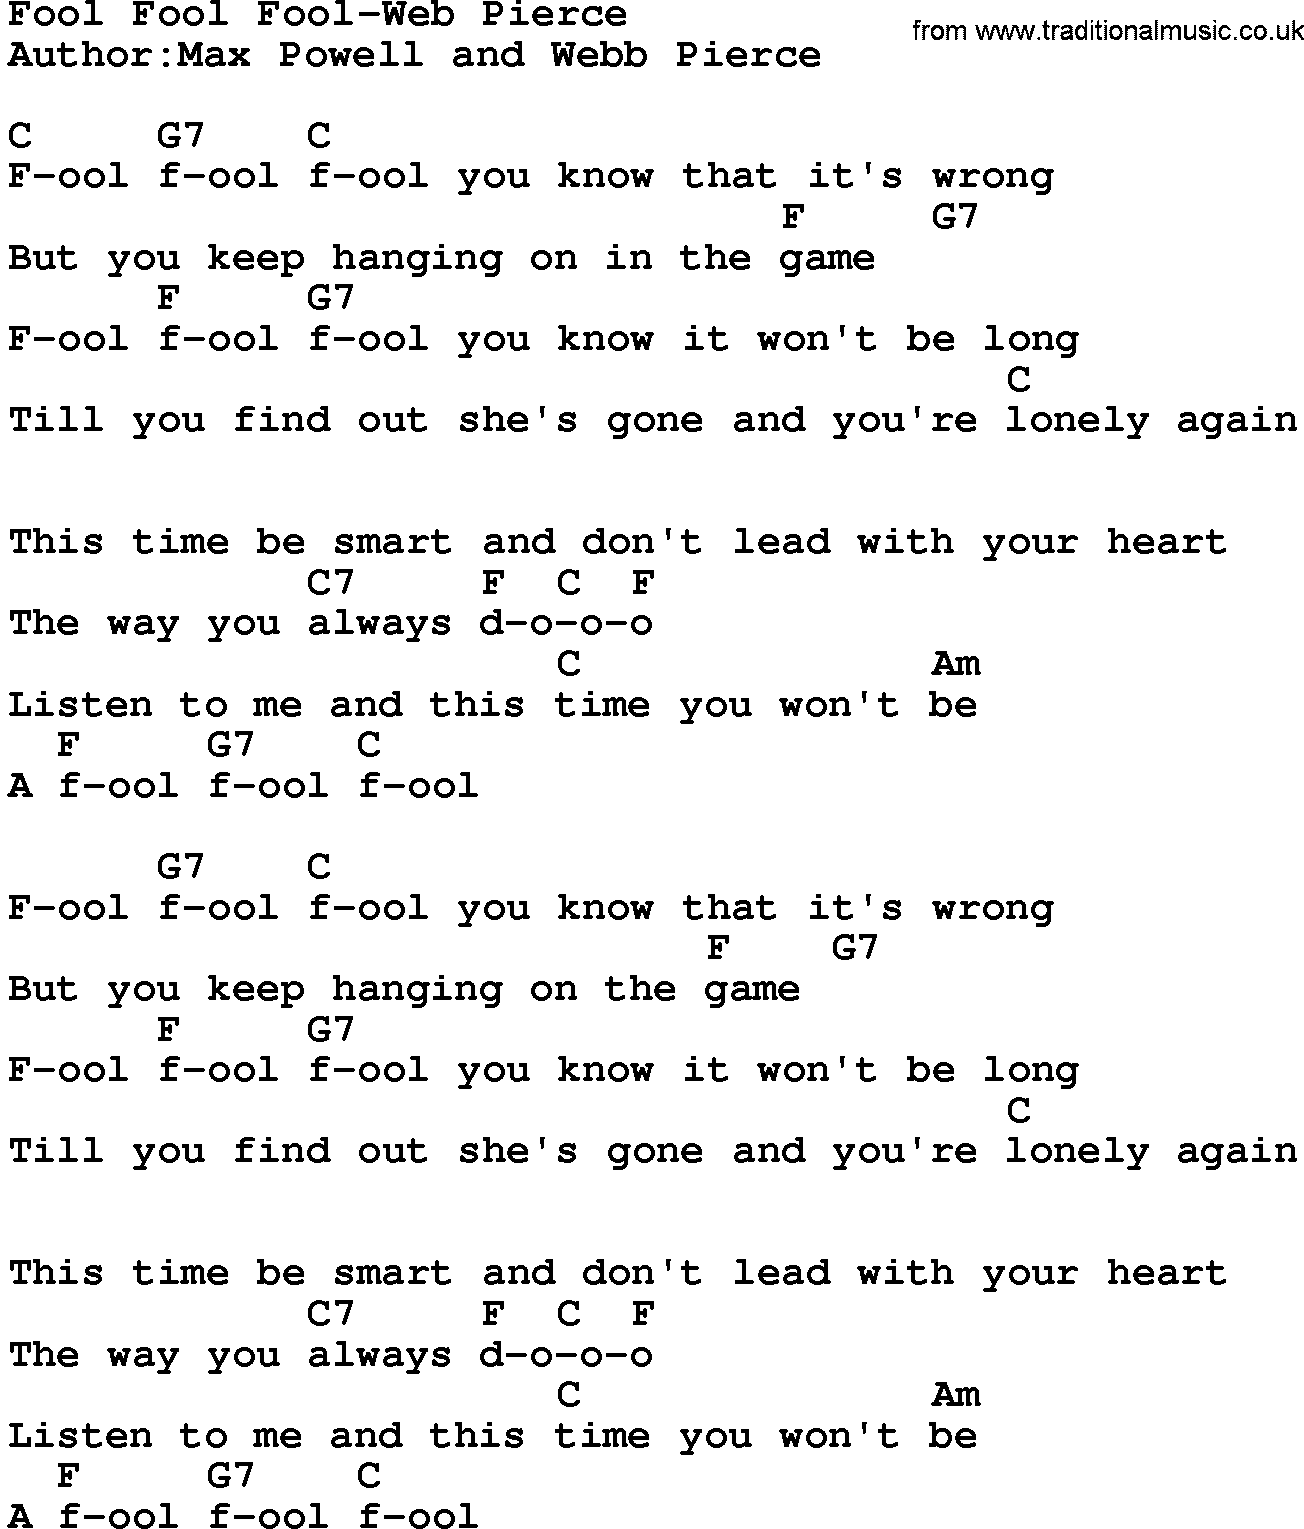 Country music song: Fool Fool Fool-Web Pierce lyrics and chords